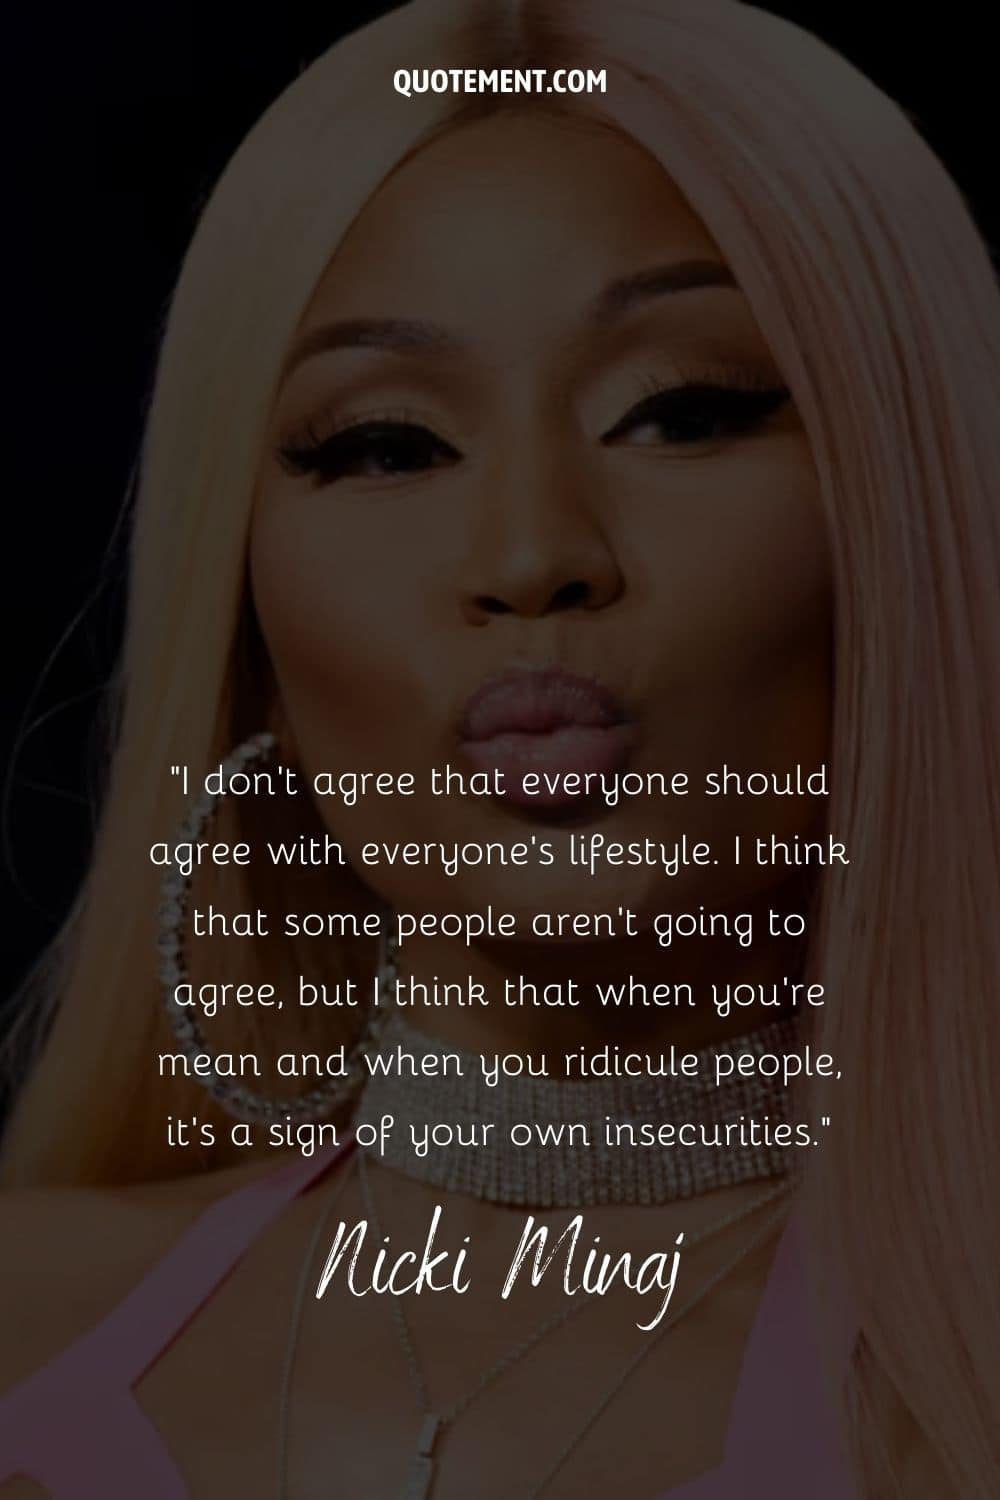 Cita de Nicki Minaj sobre la gente mezquina e insegura y su retrato de fondo